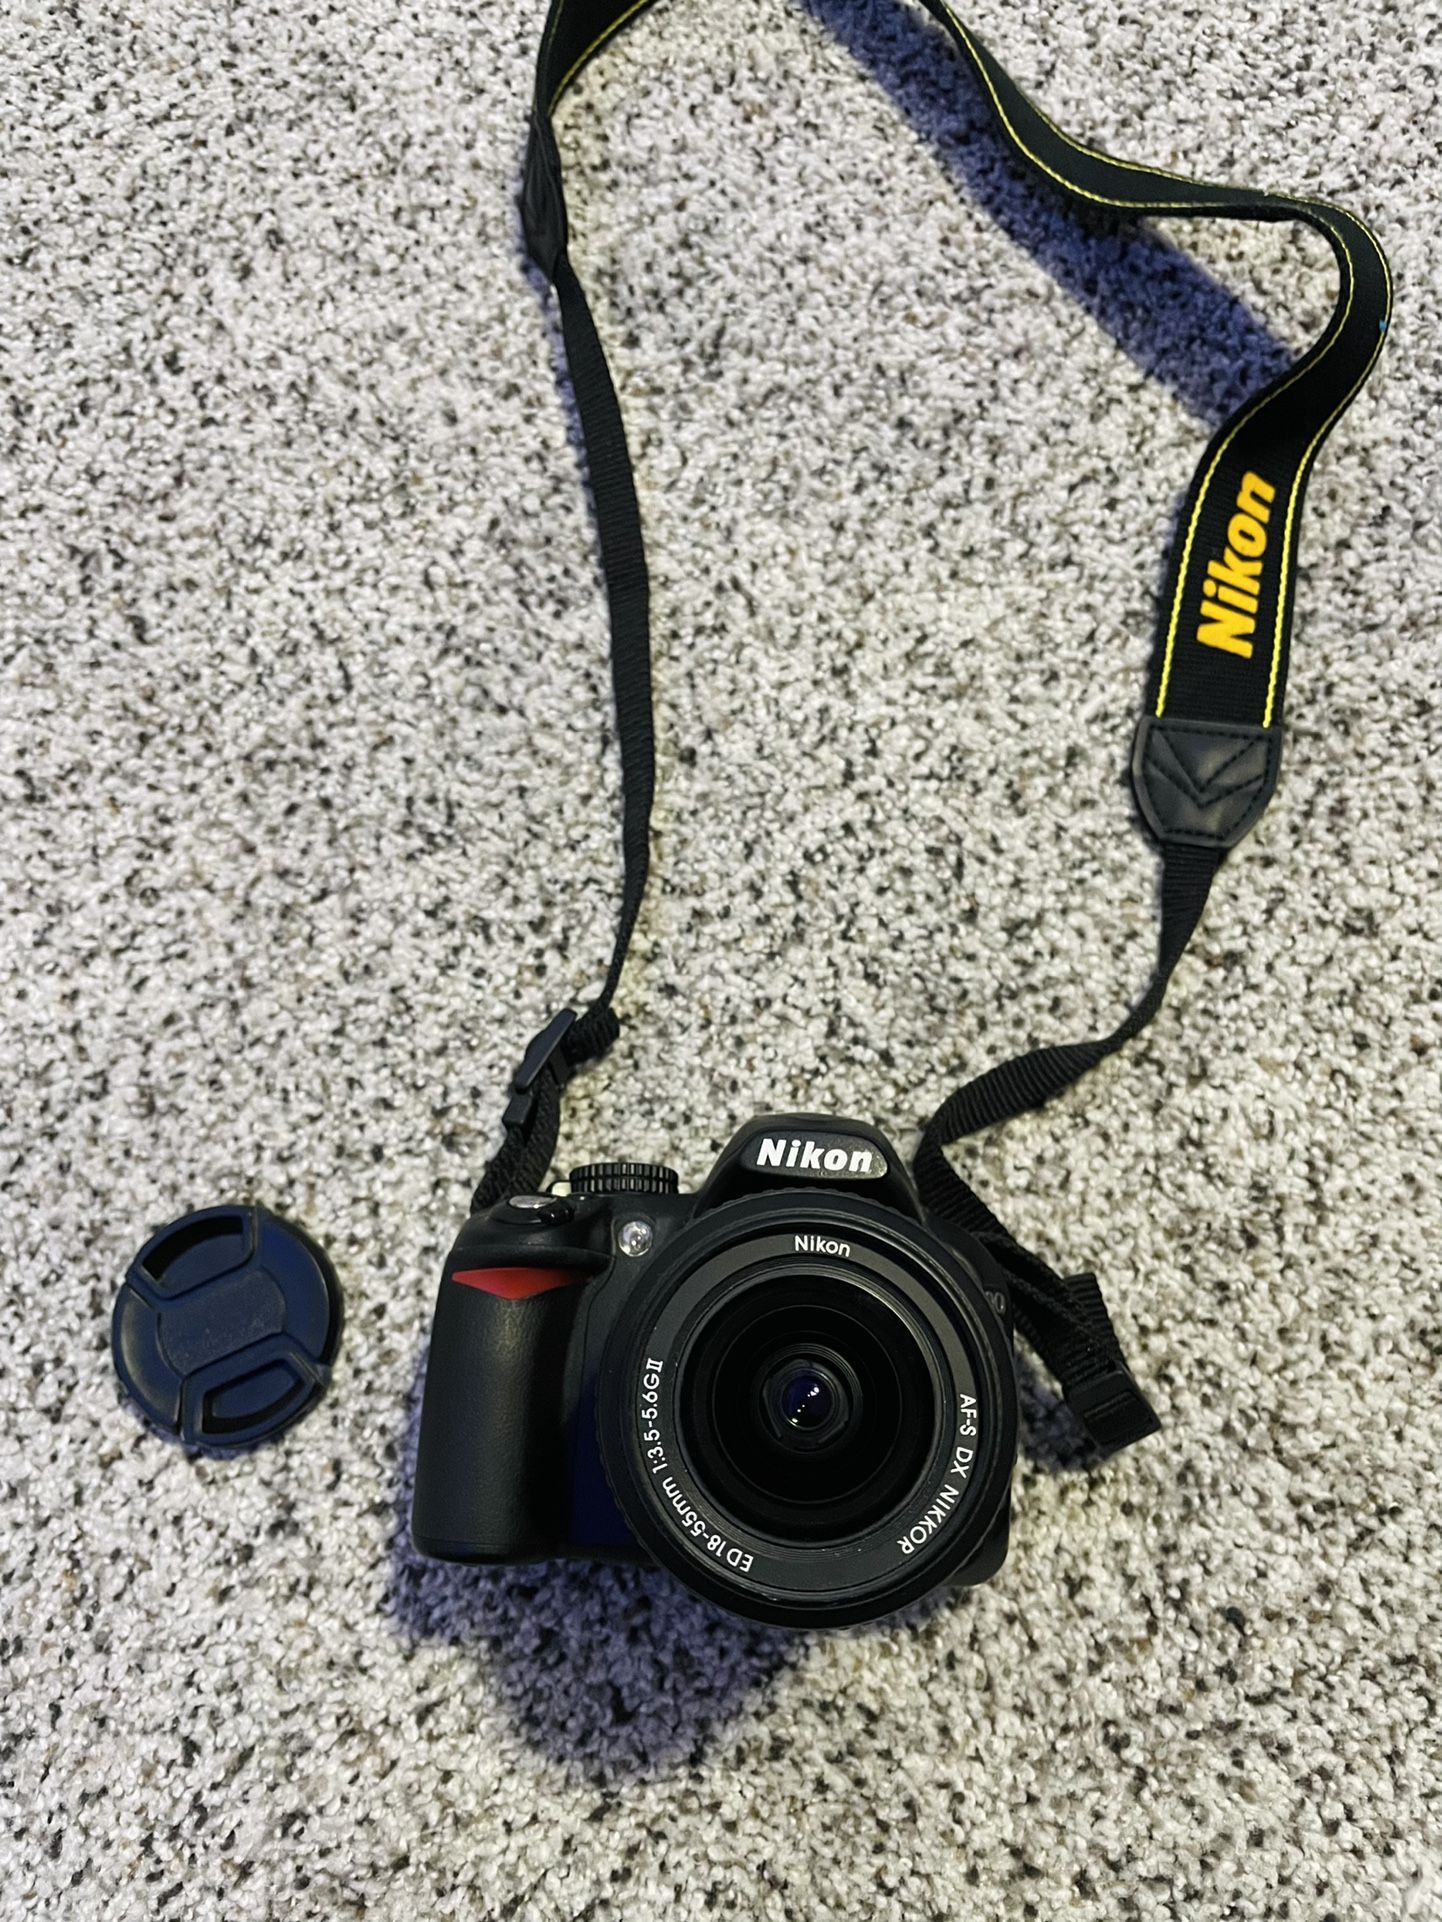 Nikon D3100 With 18-55mm Kit Lens 